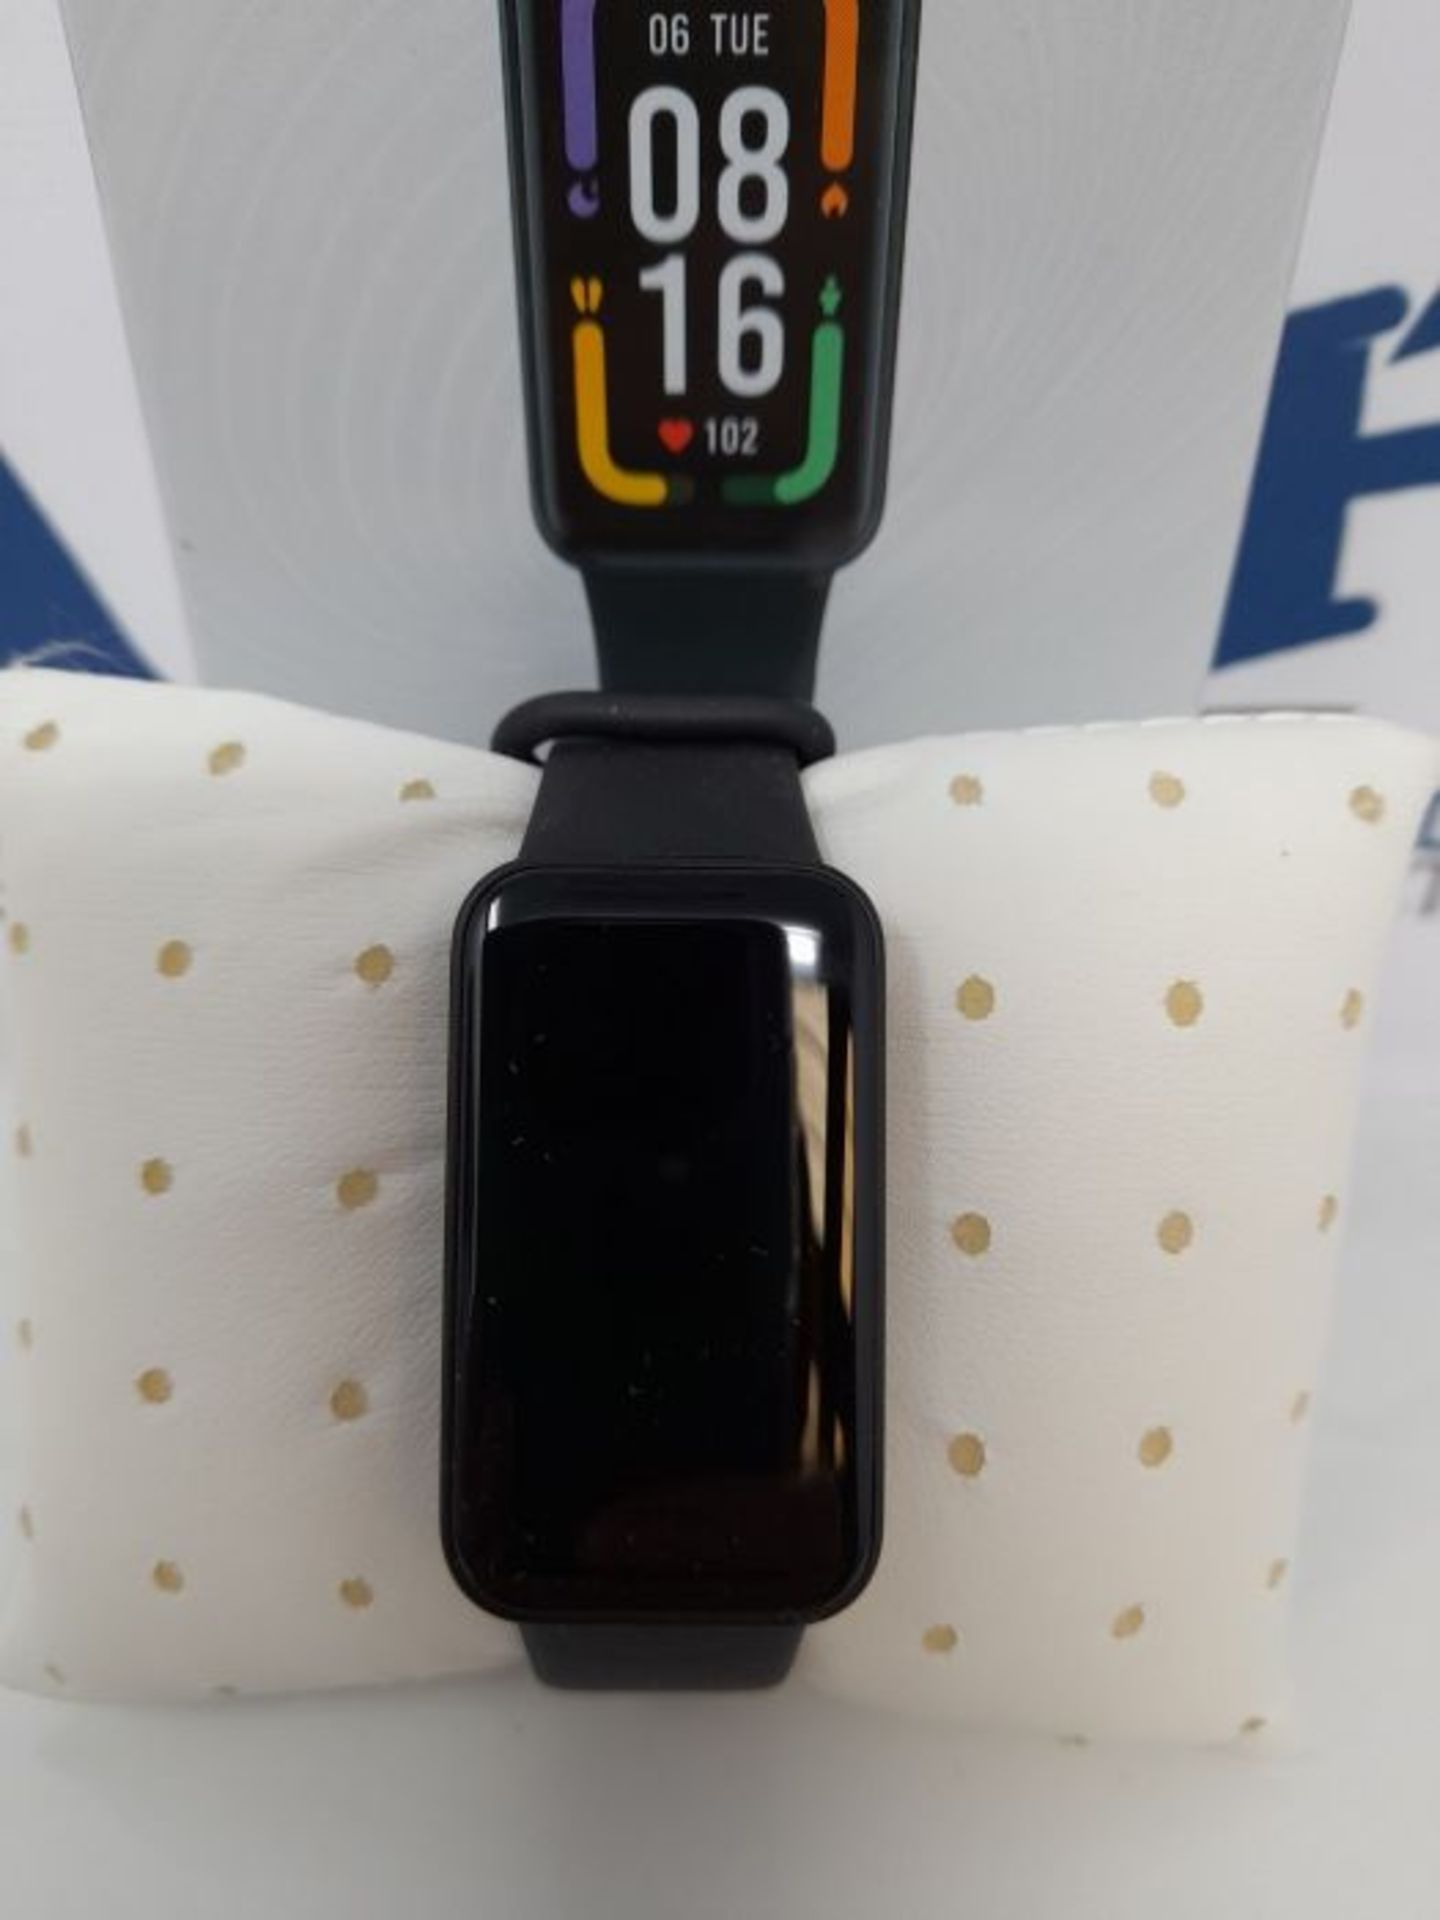 Xiaomi Redmi Smart Band PRO, Redmi Smart Watch, 1.47 "AMOLED Screen, Water Resistant, - Image 3 of 3